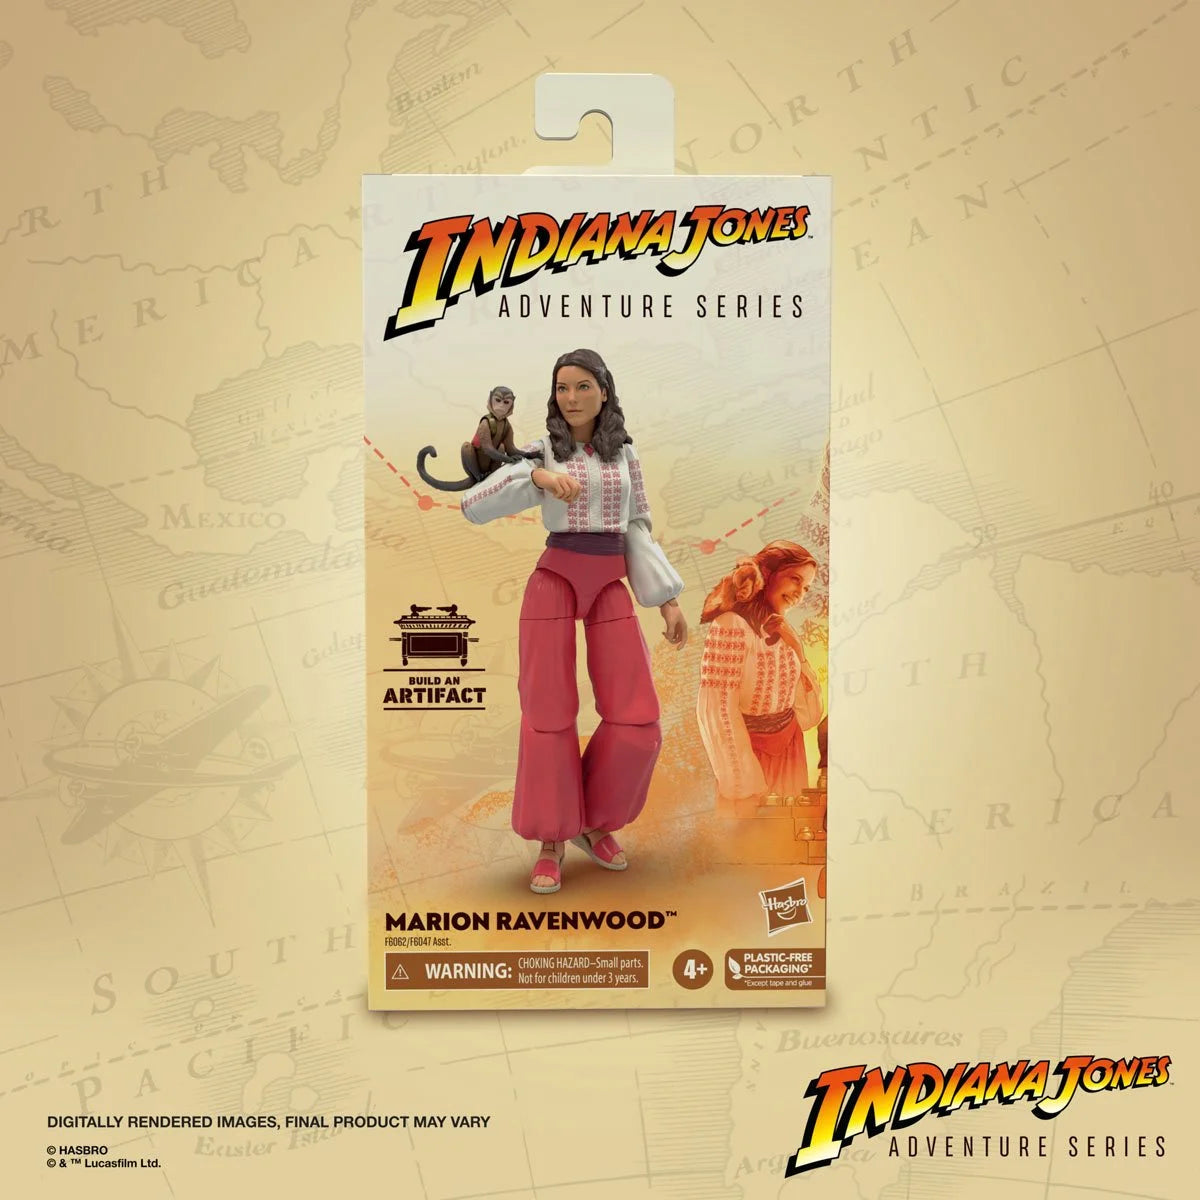 Indiana Jones Adventure Series Marion Ravenwood 6-Inch Action Figure Toy - Heretoserveyou